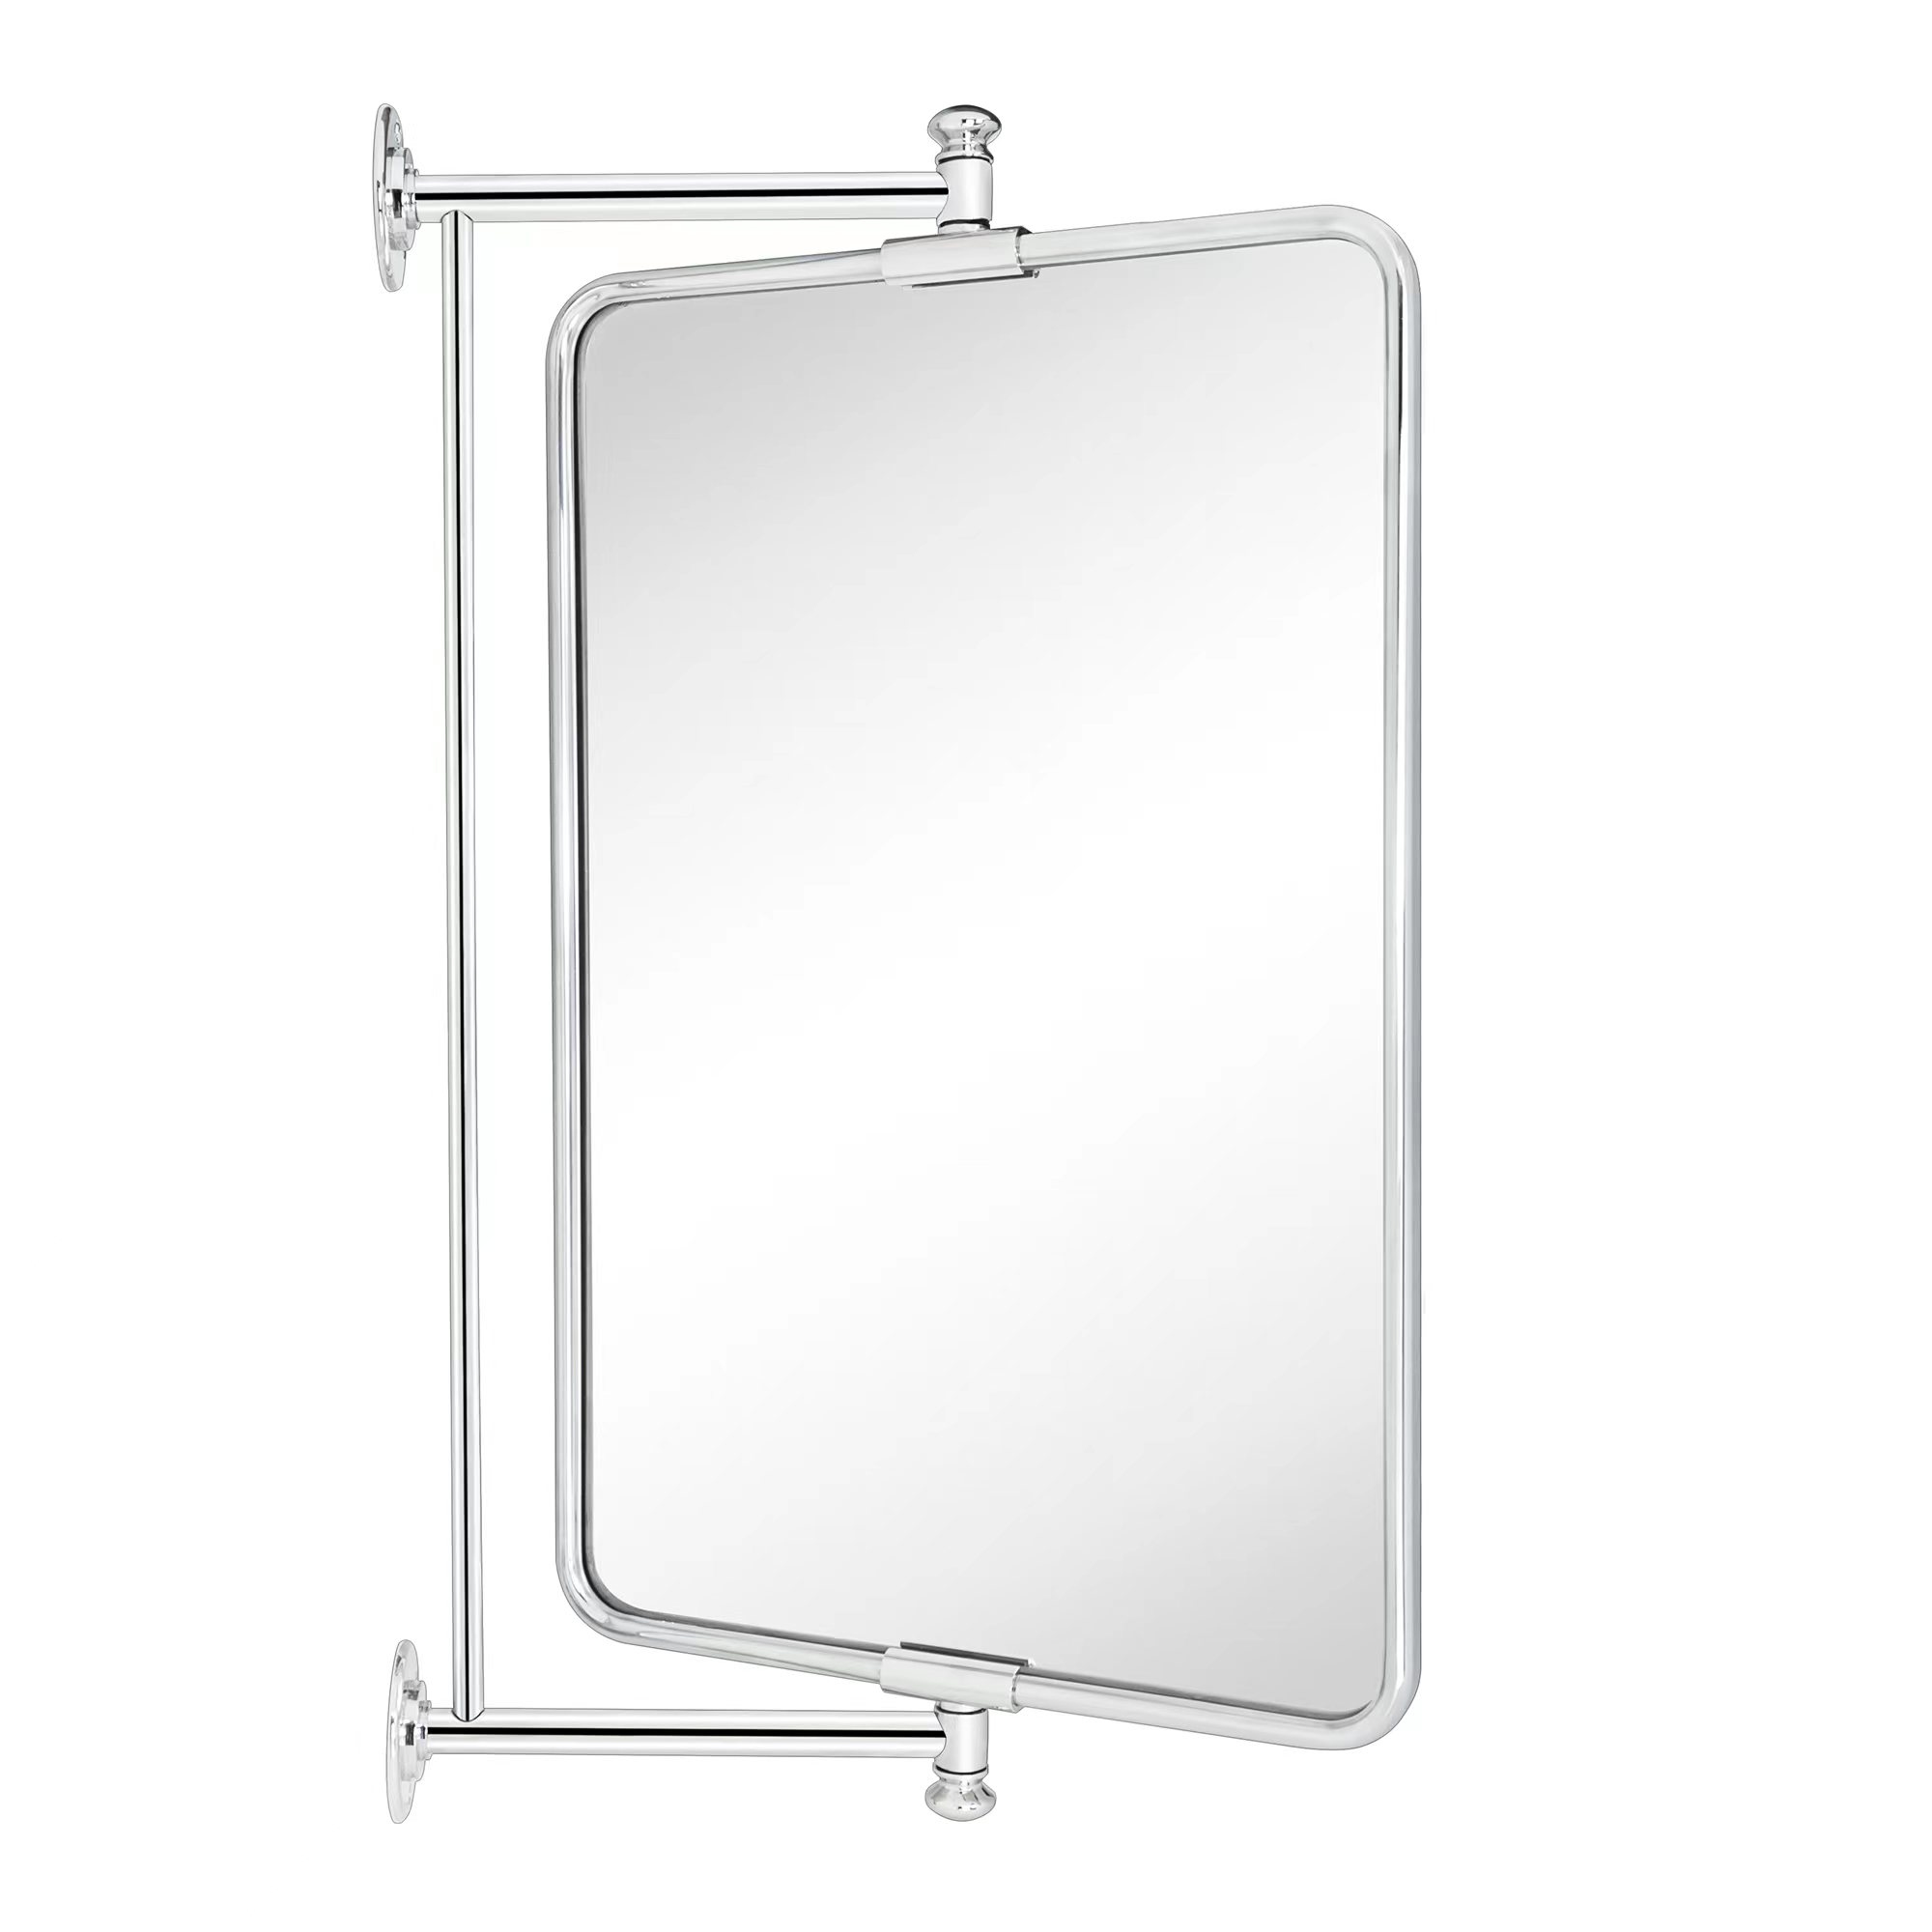 Correon Pivot-N-View Rectangle Mirror for Window Bathroom Vanity-14x22-Chrome